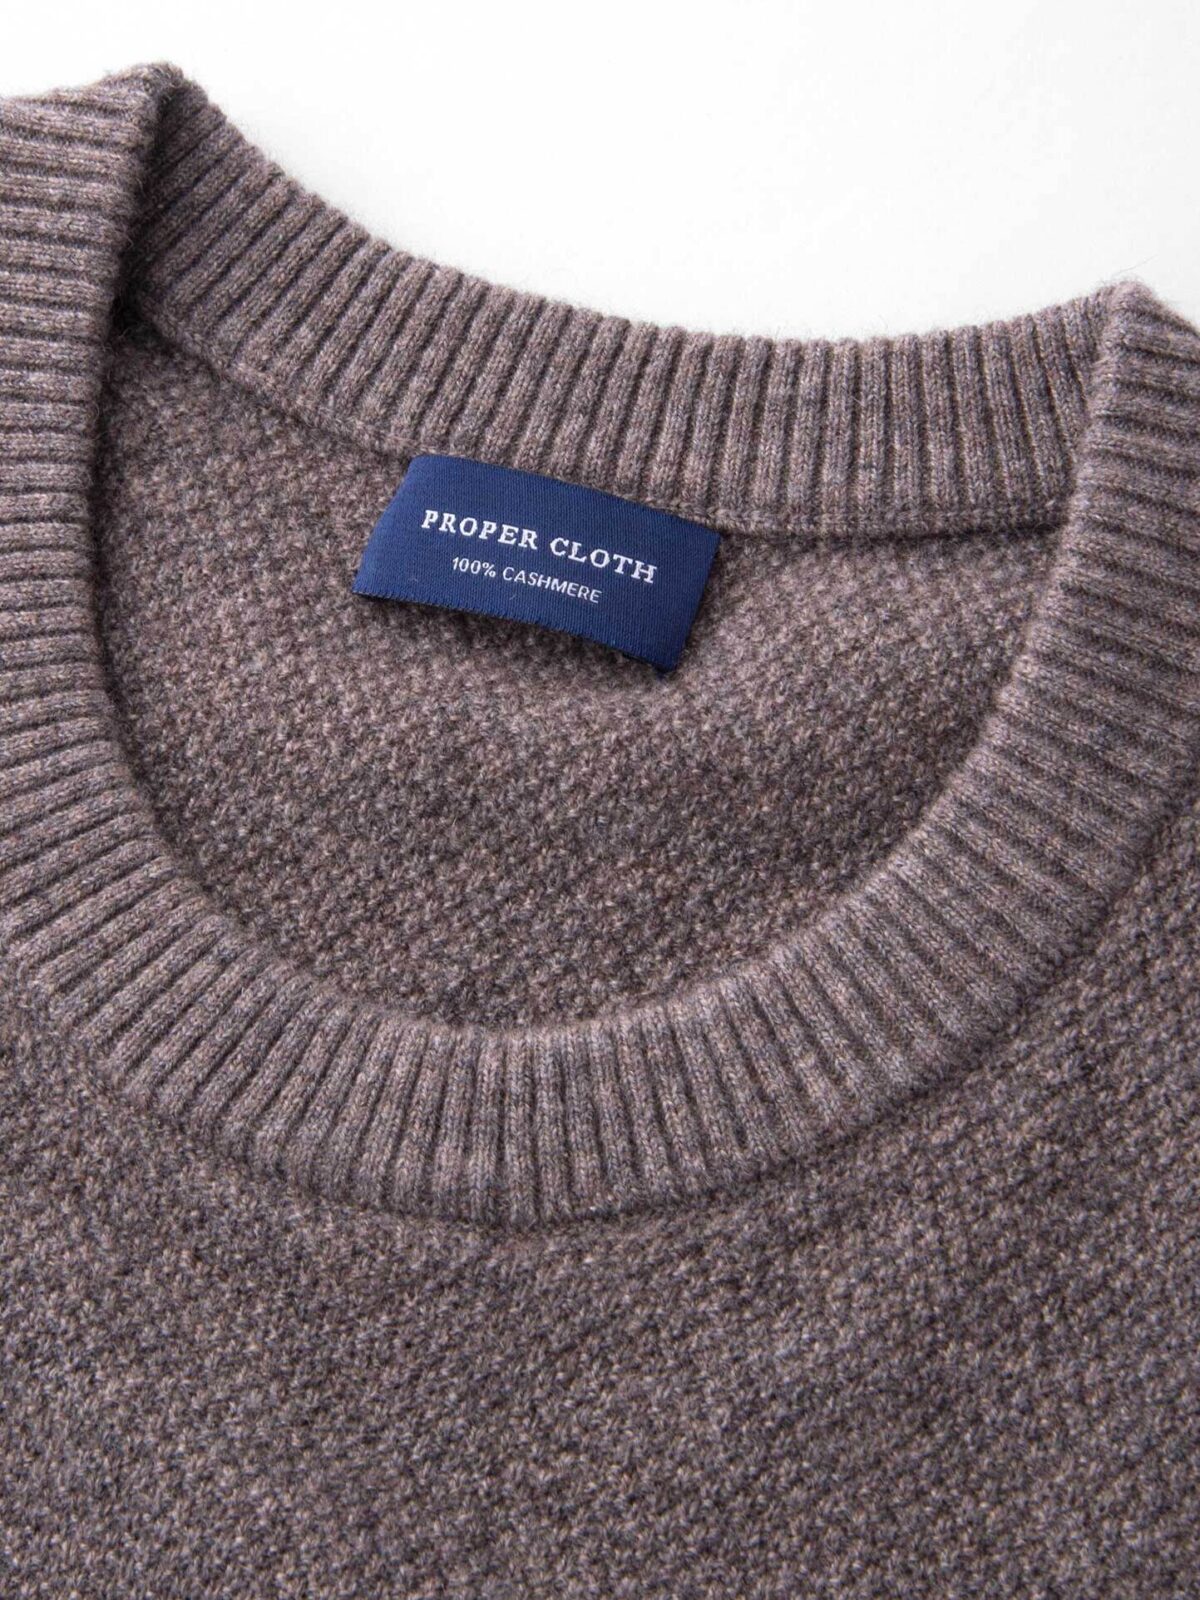 Mocha Cobble Stitch Cashmere Crewneck Sweater